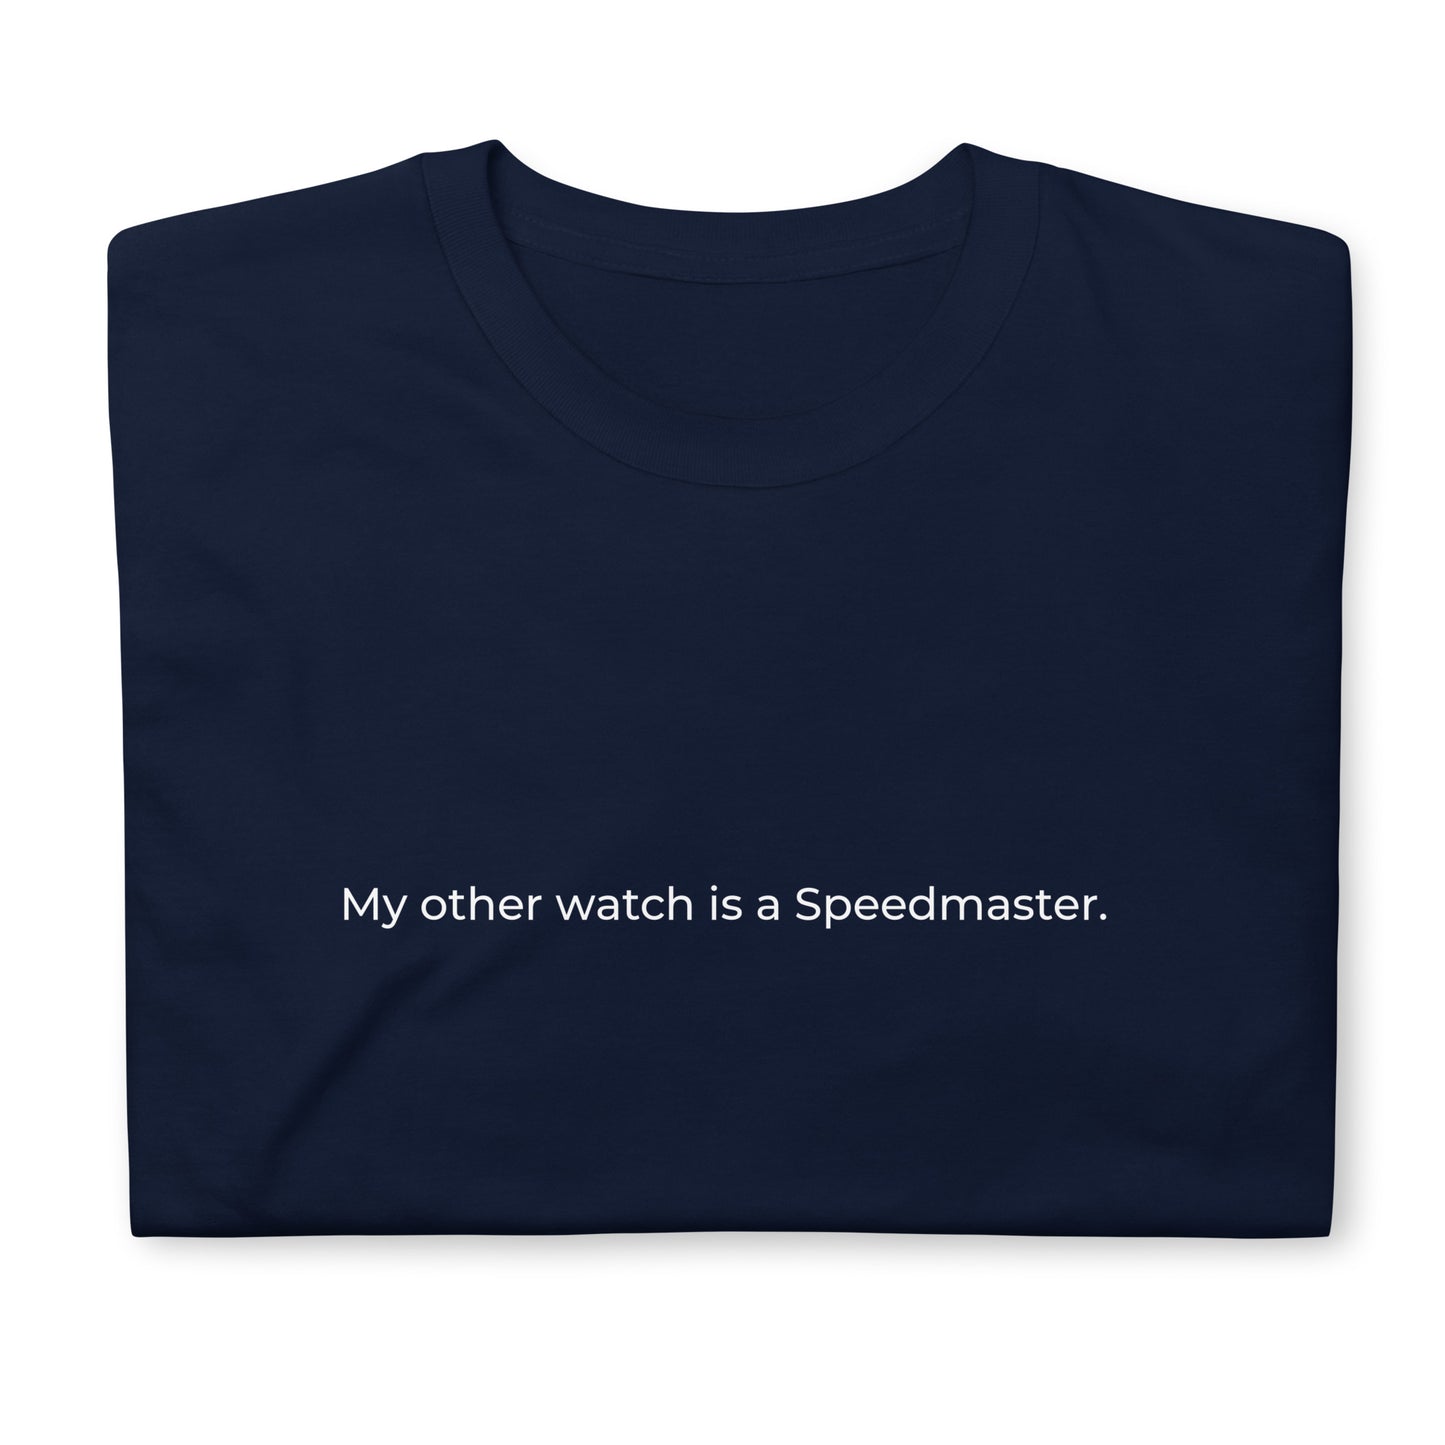 My other watch is a Speedmaster.